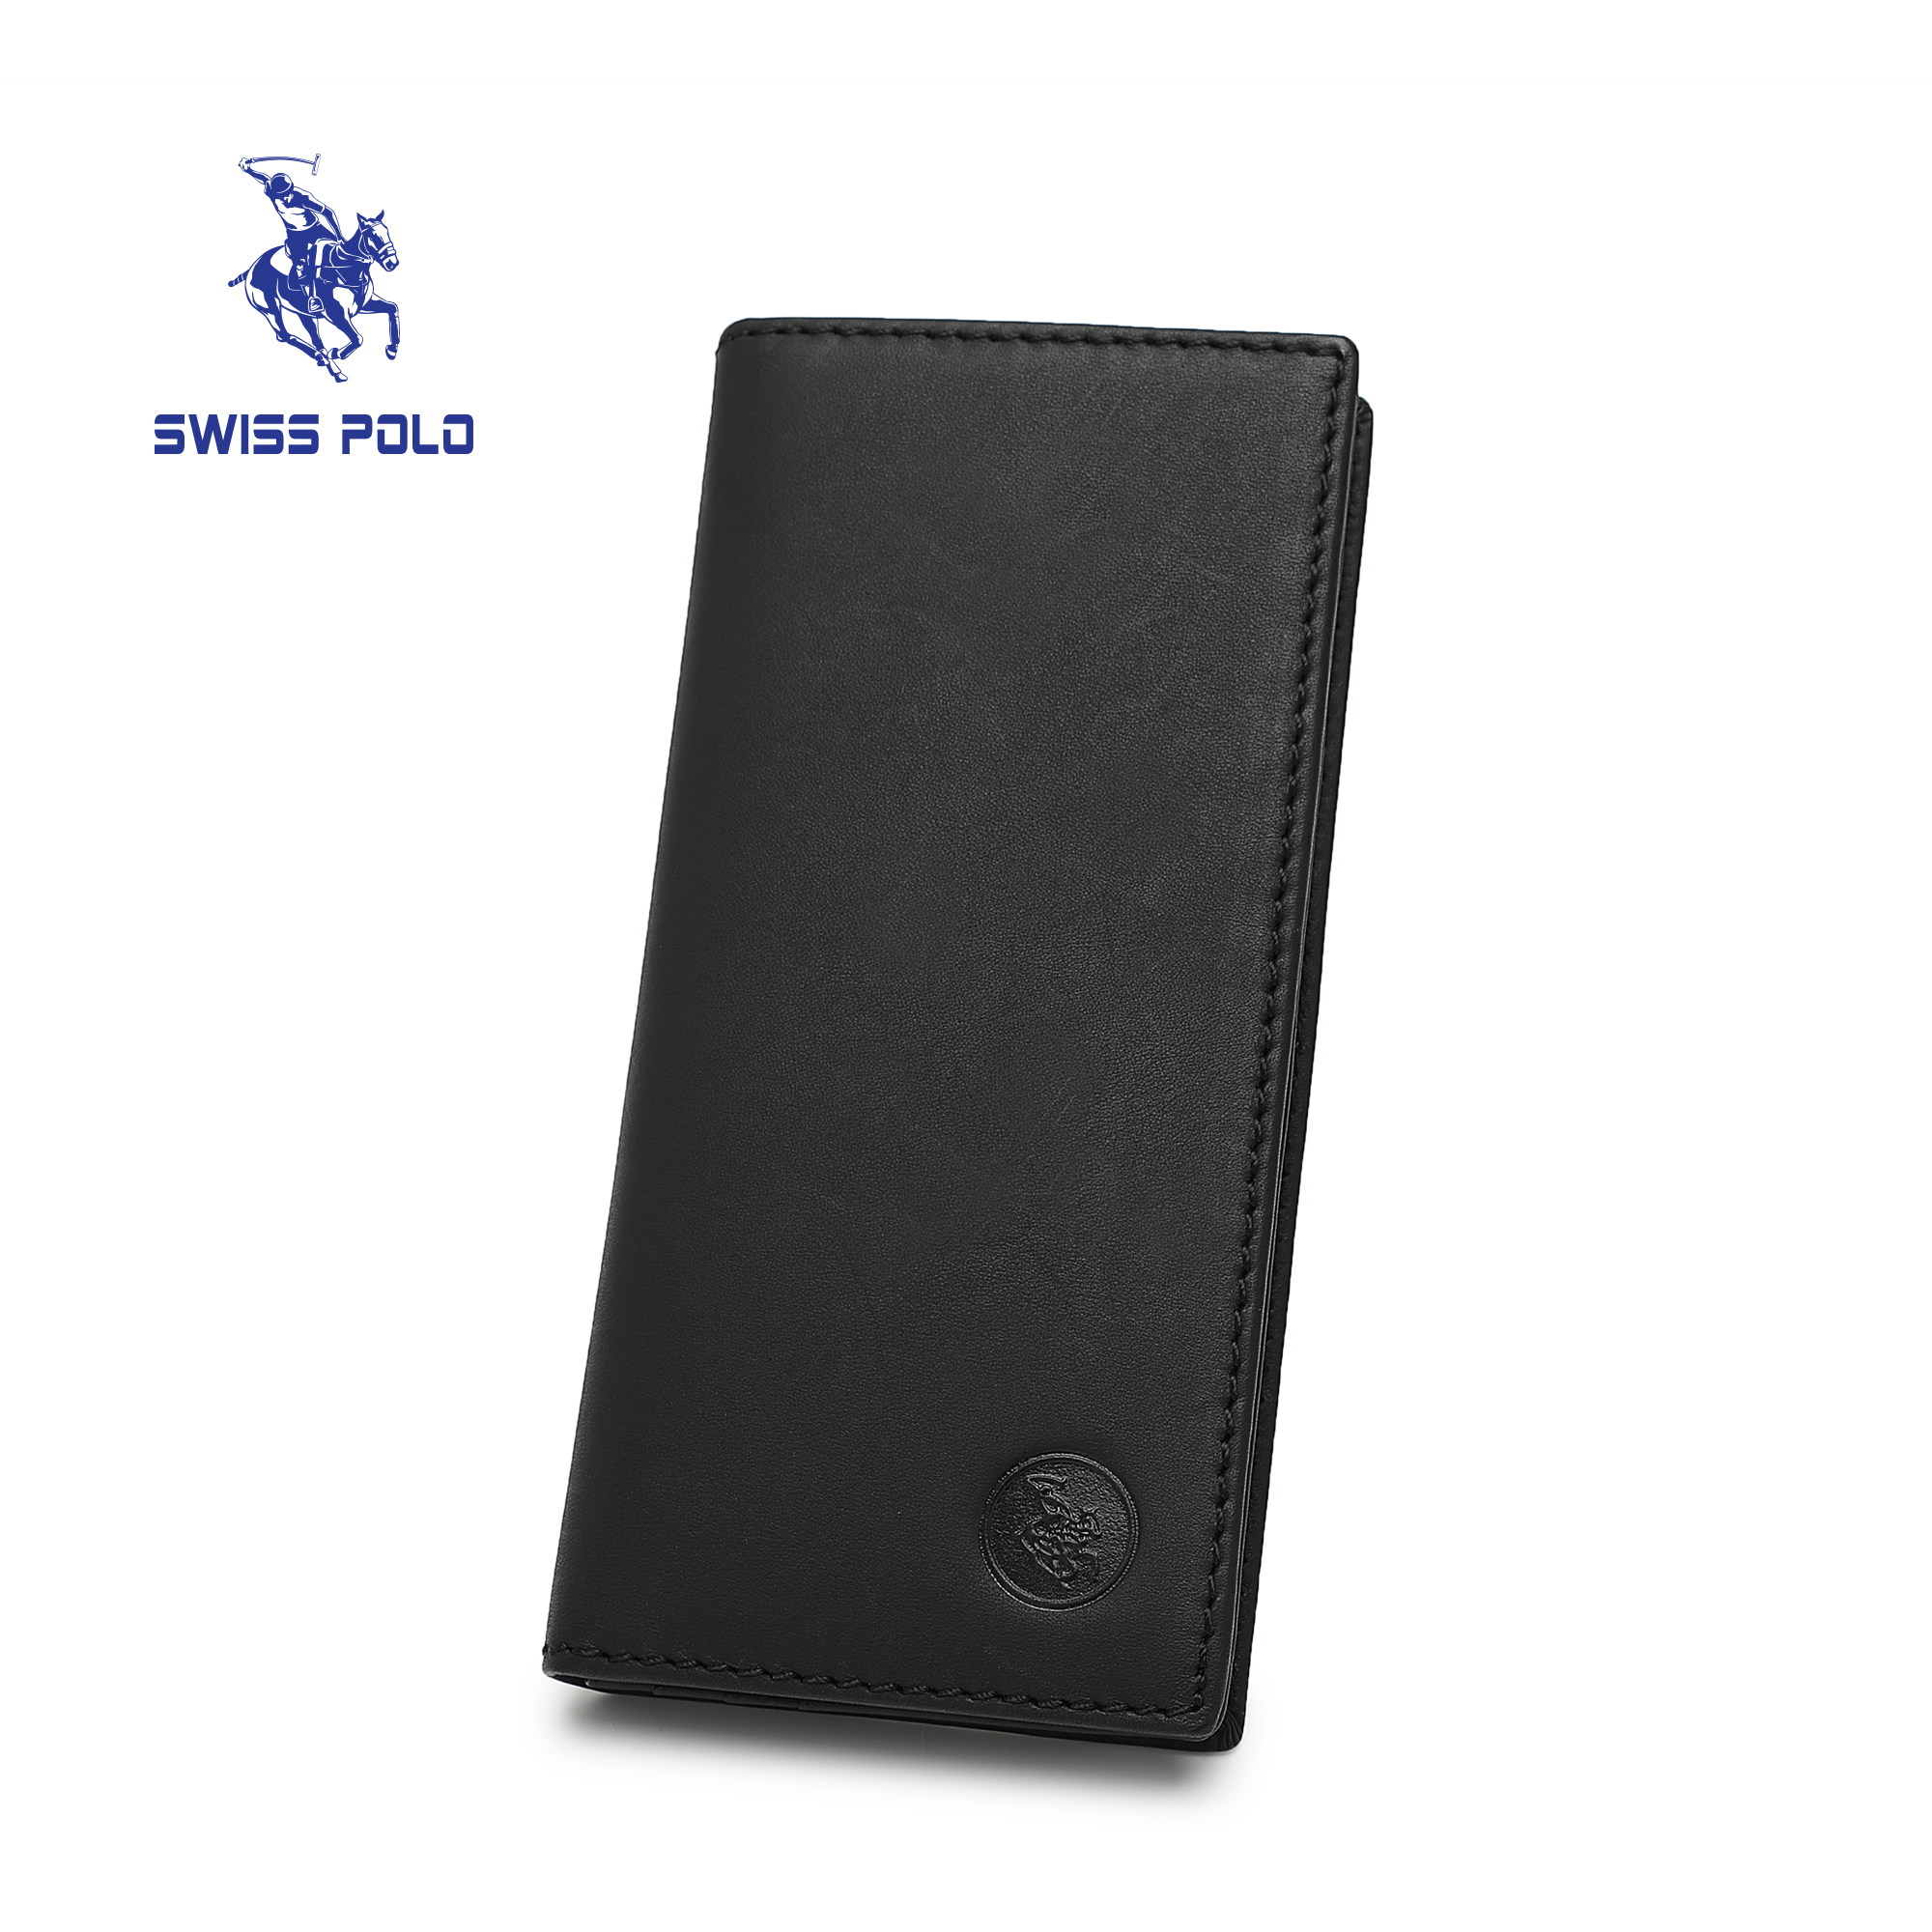 SWISS POLO Genuine Leather RFID Long Wallet SW 180-1 BLACK